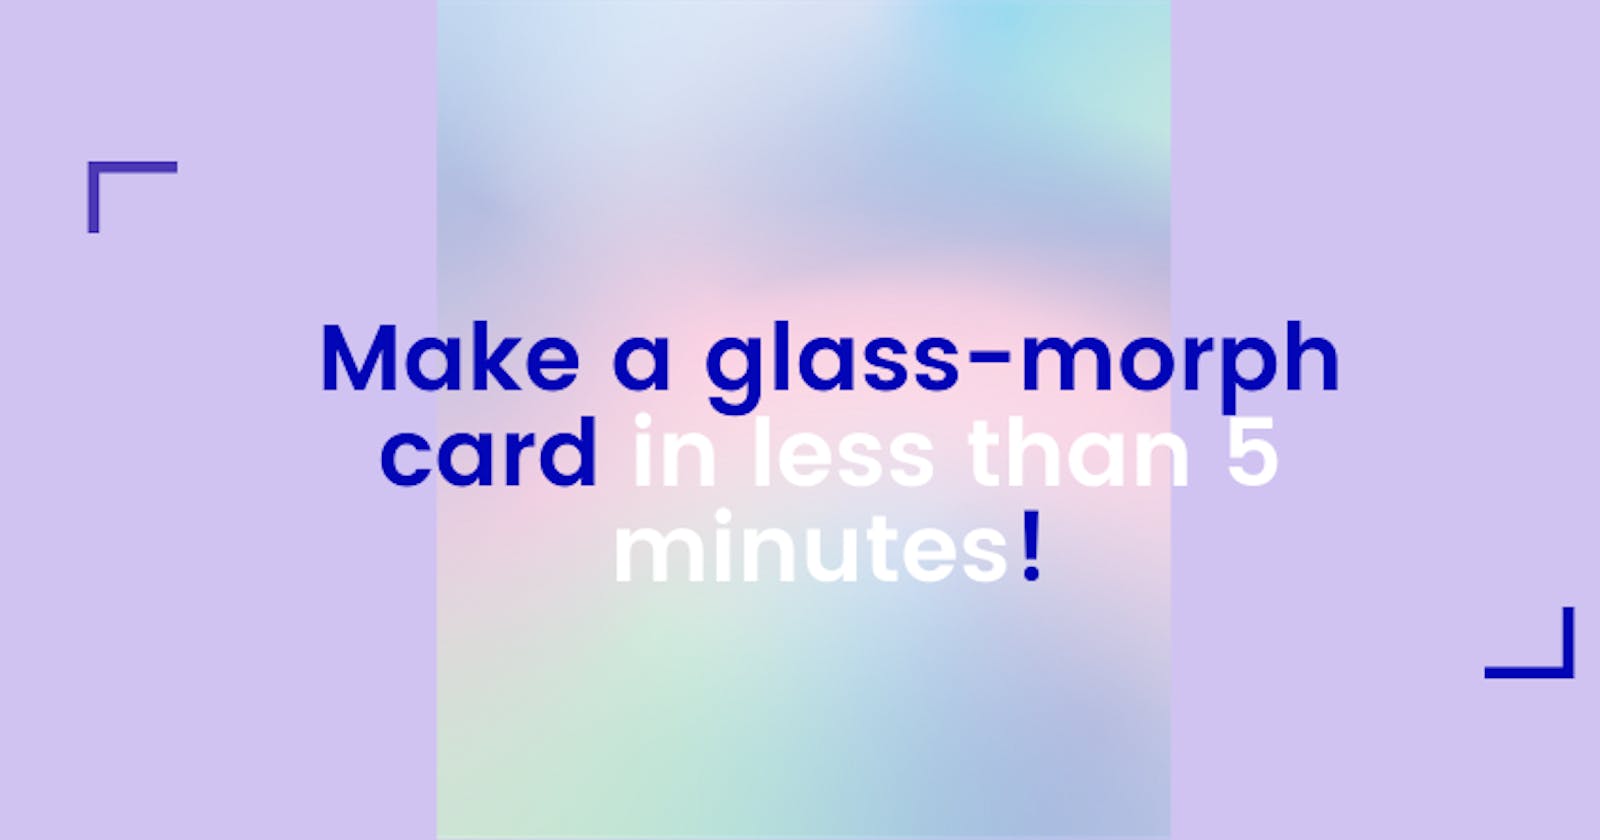 Make a Glassmorph card in less than 5 minutes!